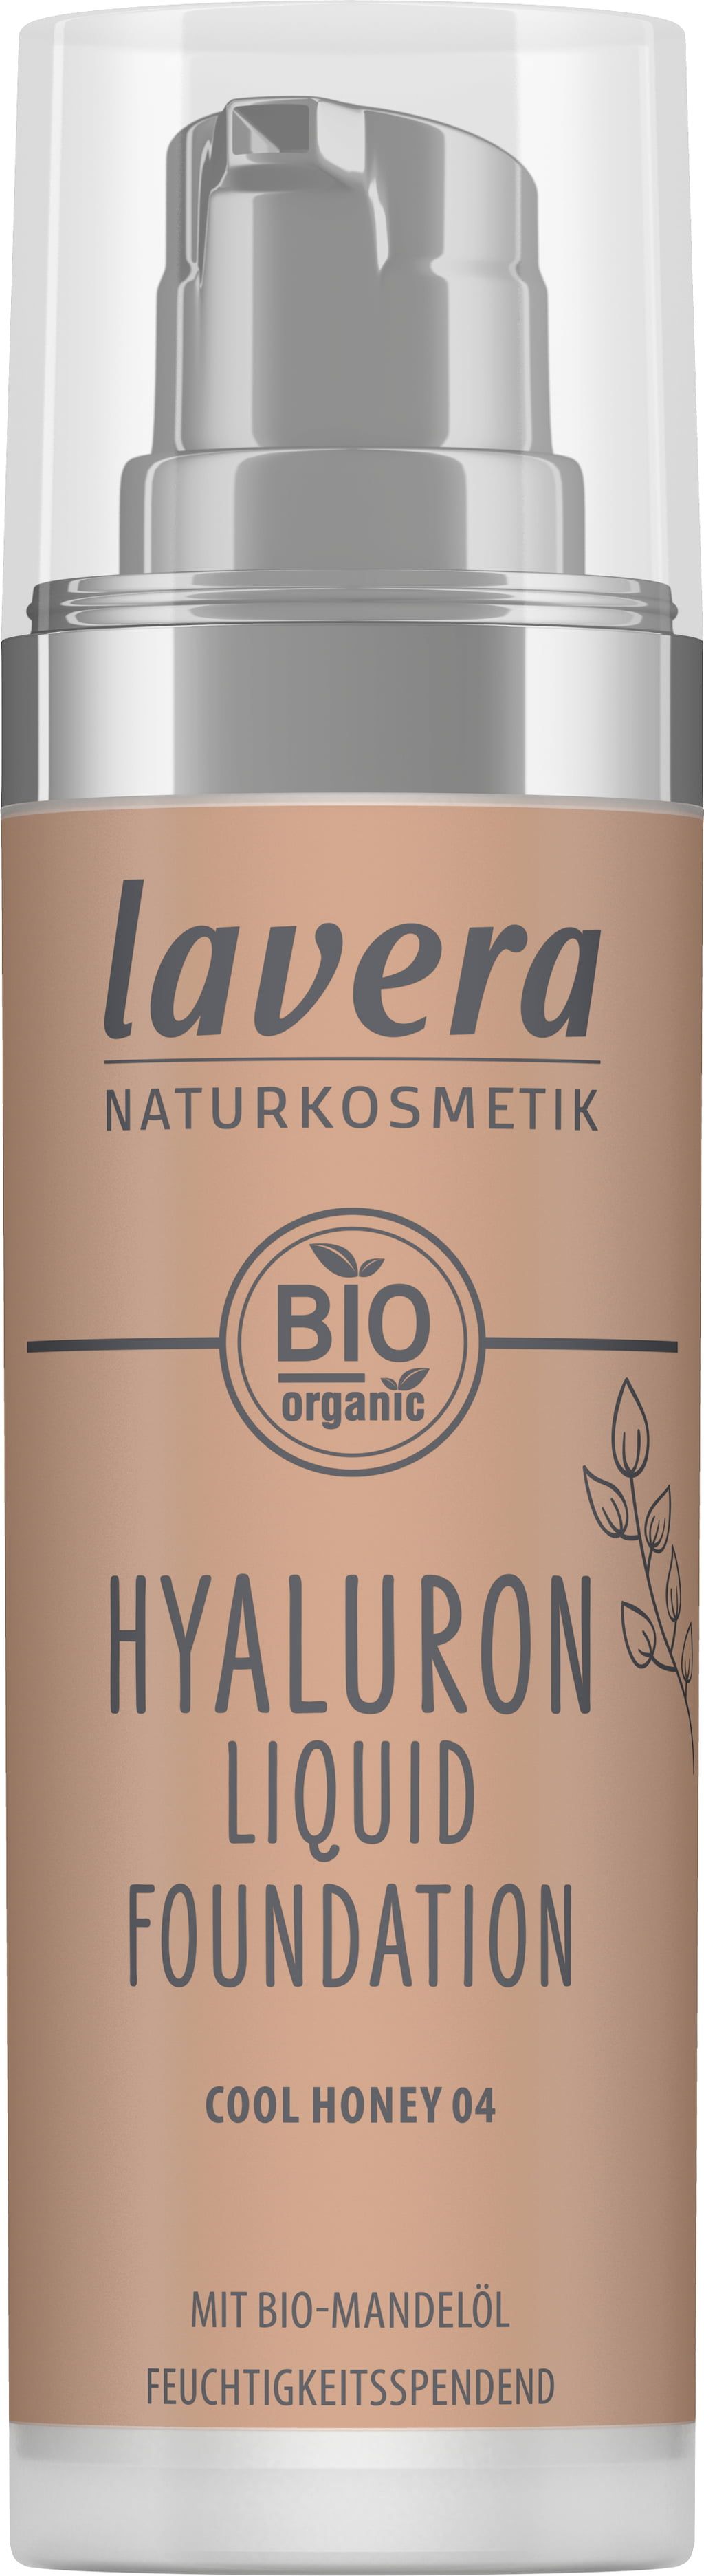 lavera Hyaluron Liquid Foundation - 04 Cool Honey